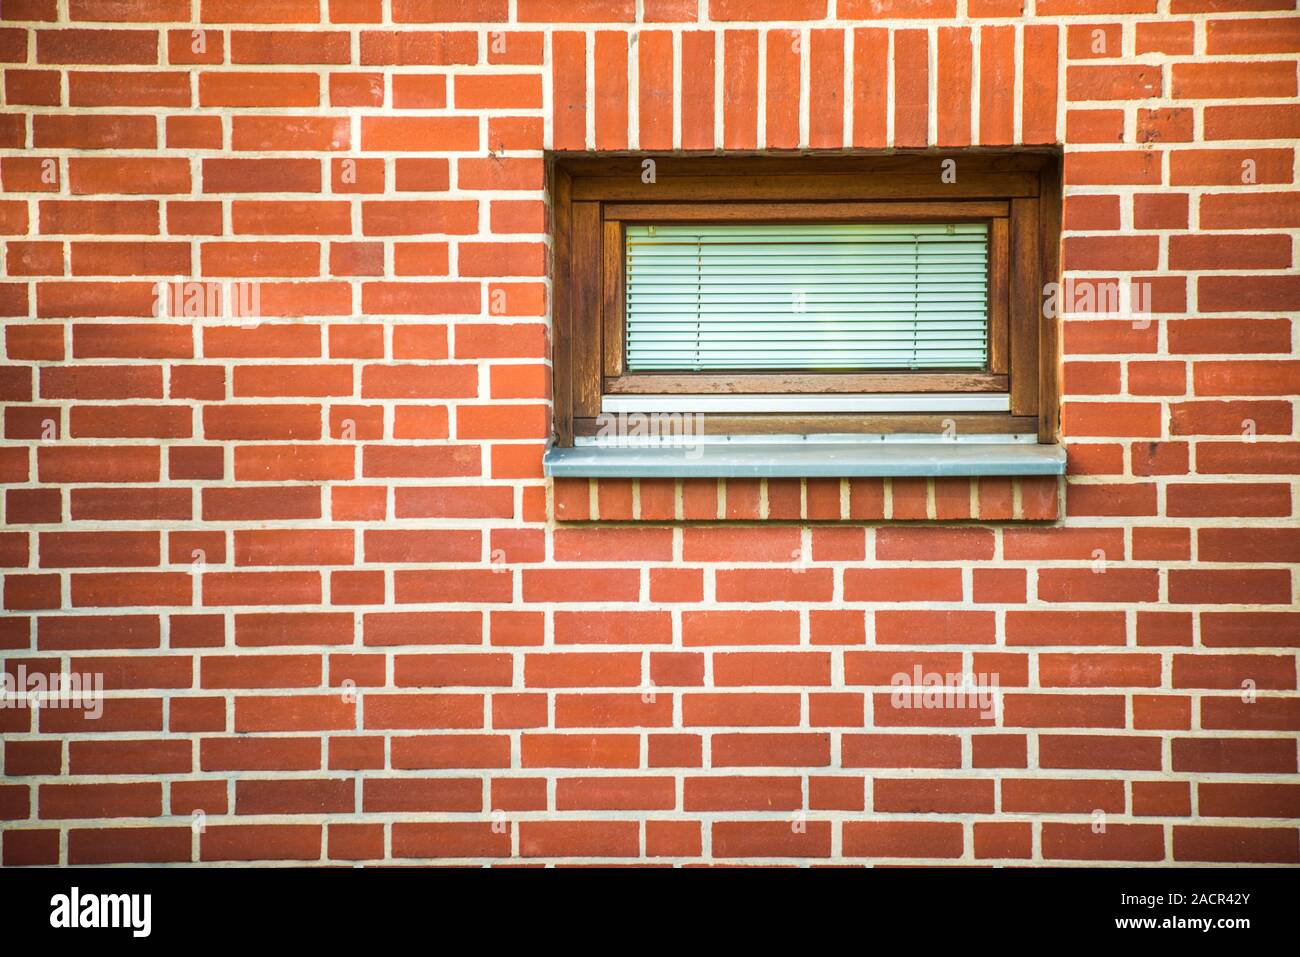 redbrick wall with window Stock Photo